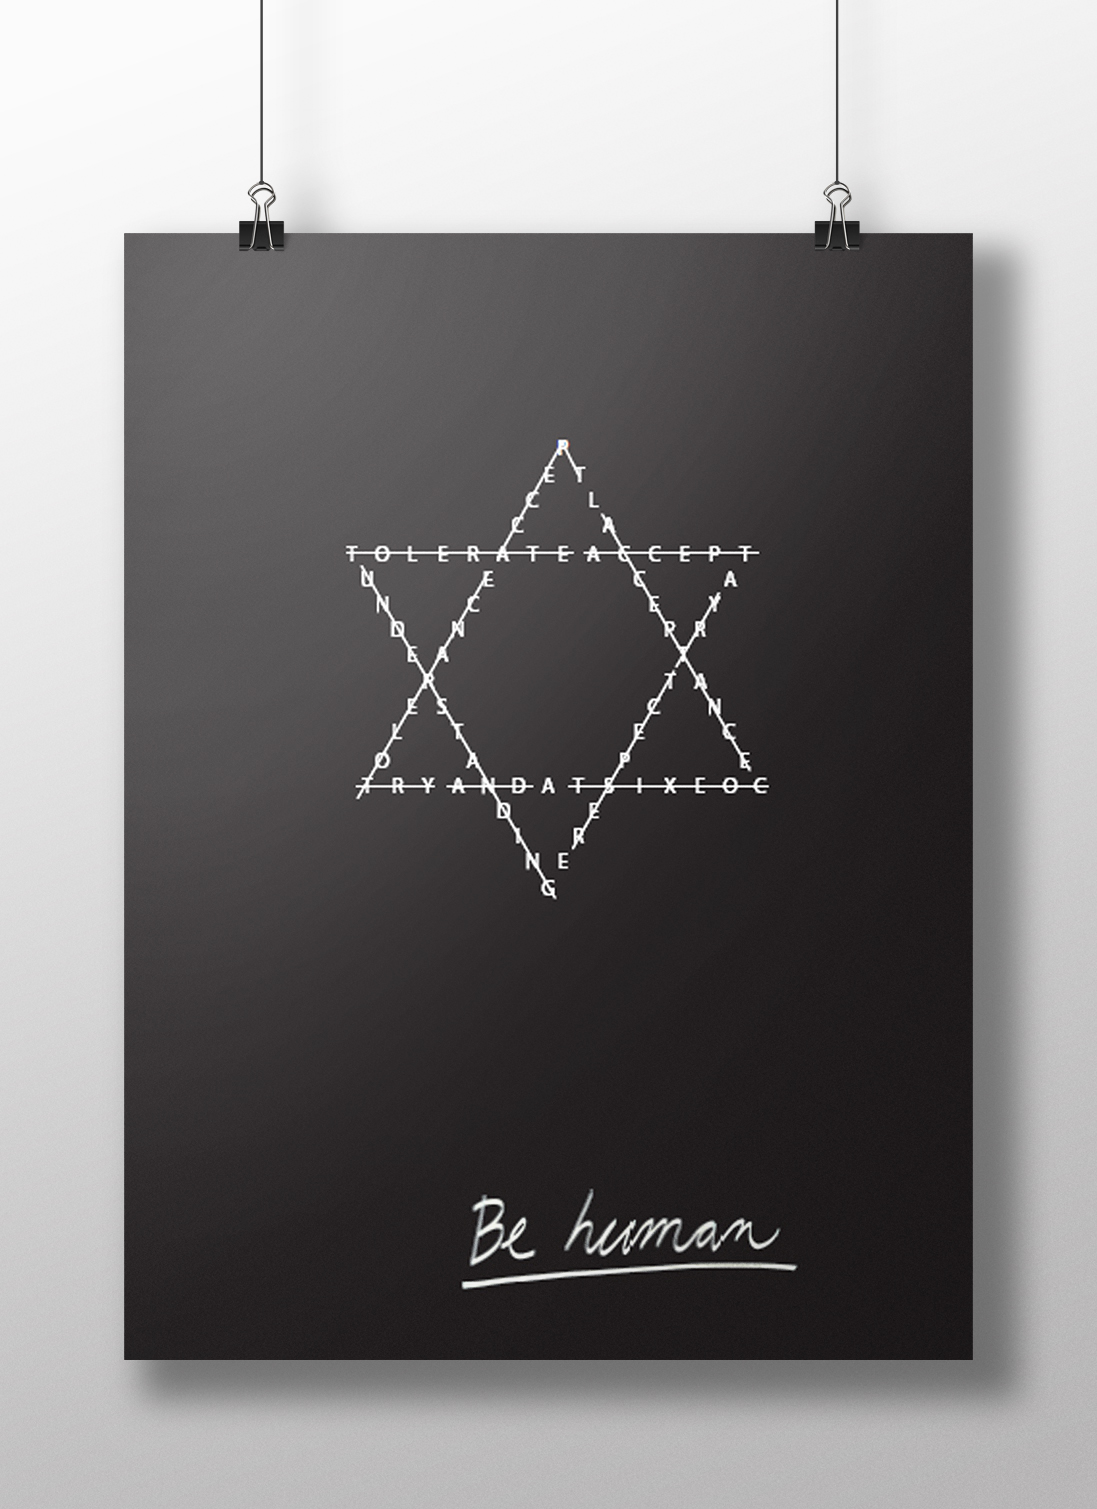 Be human